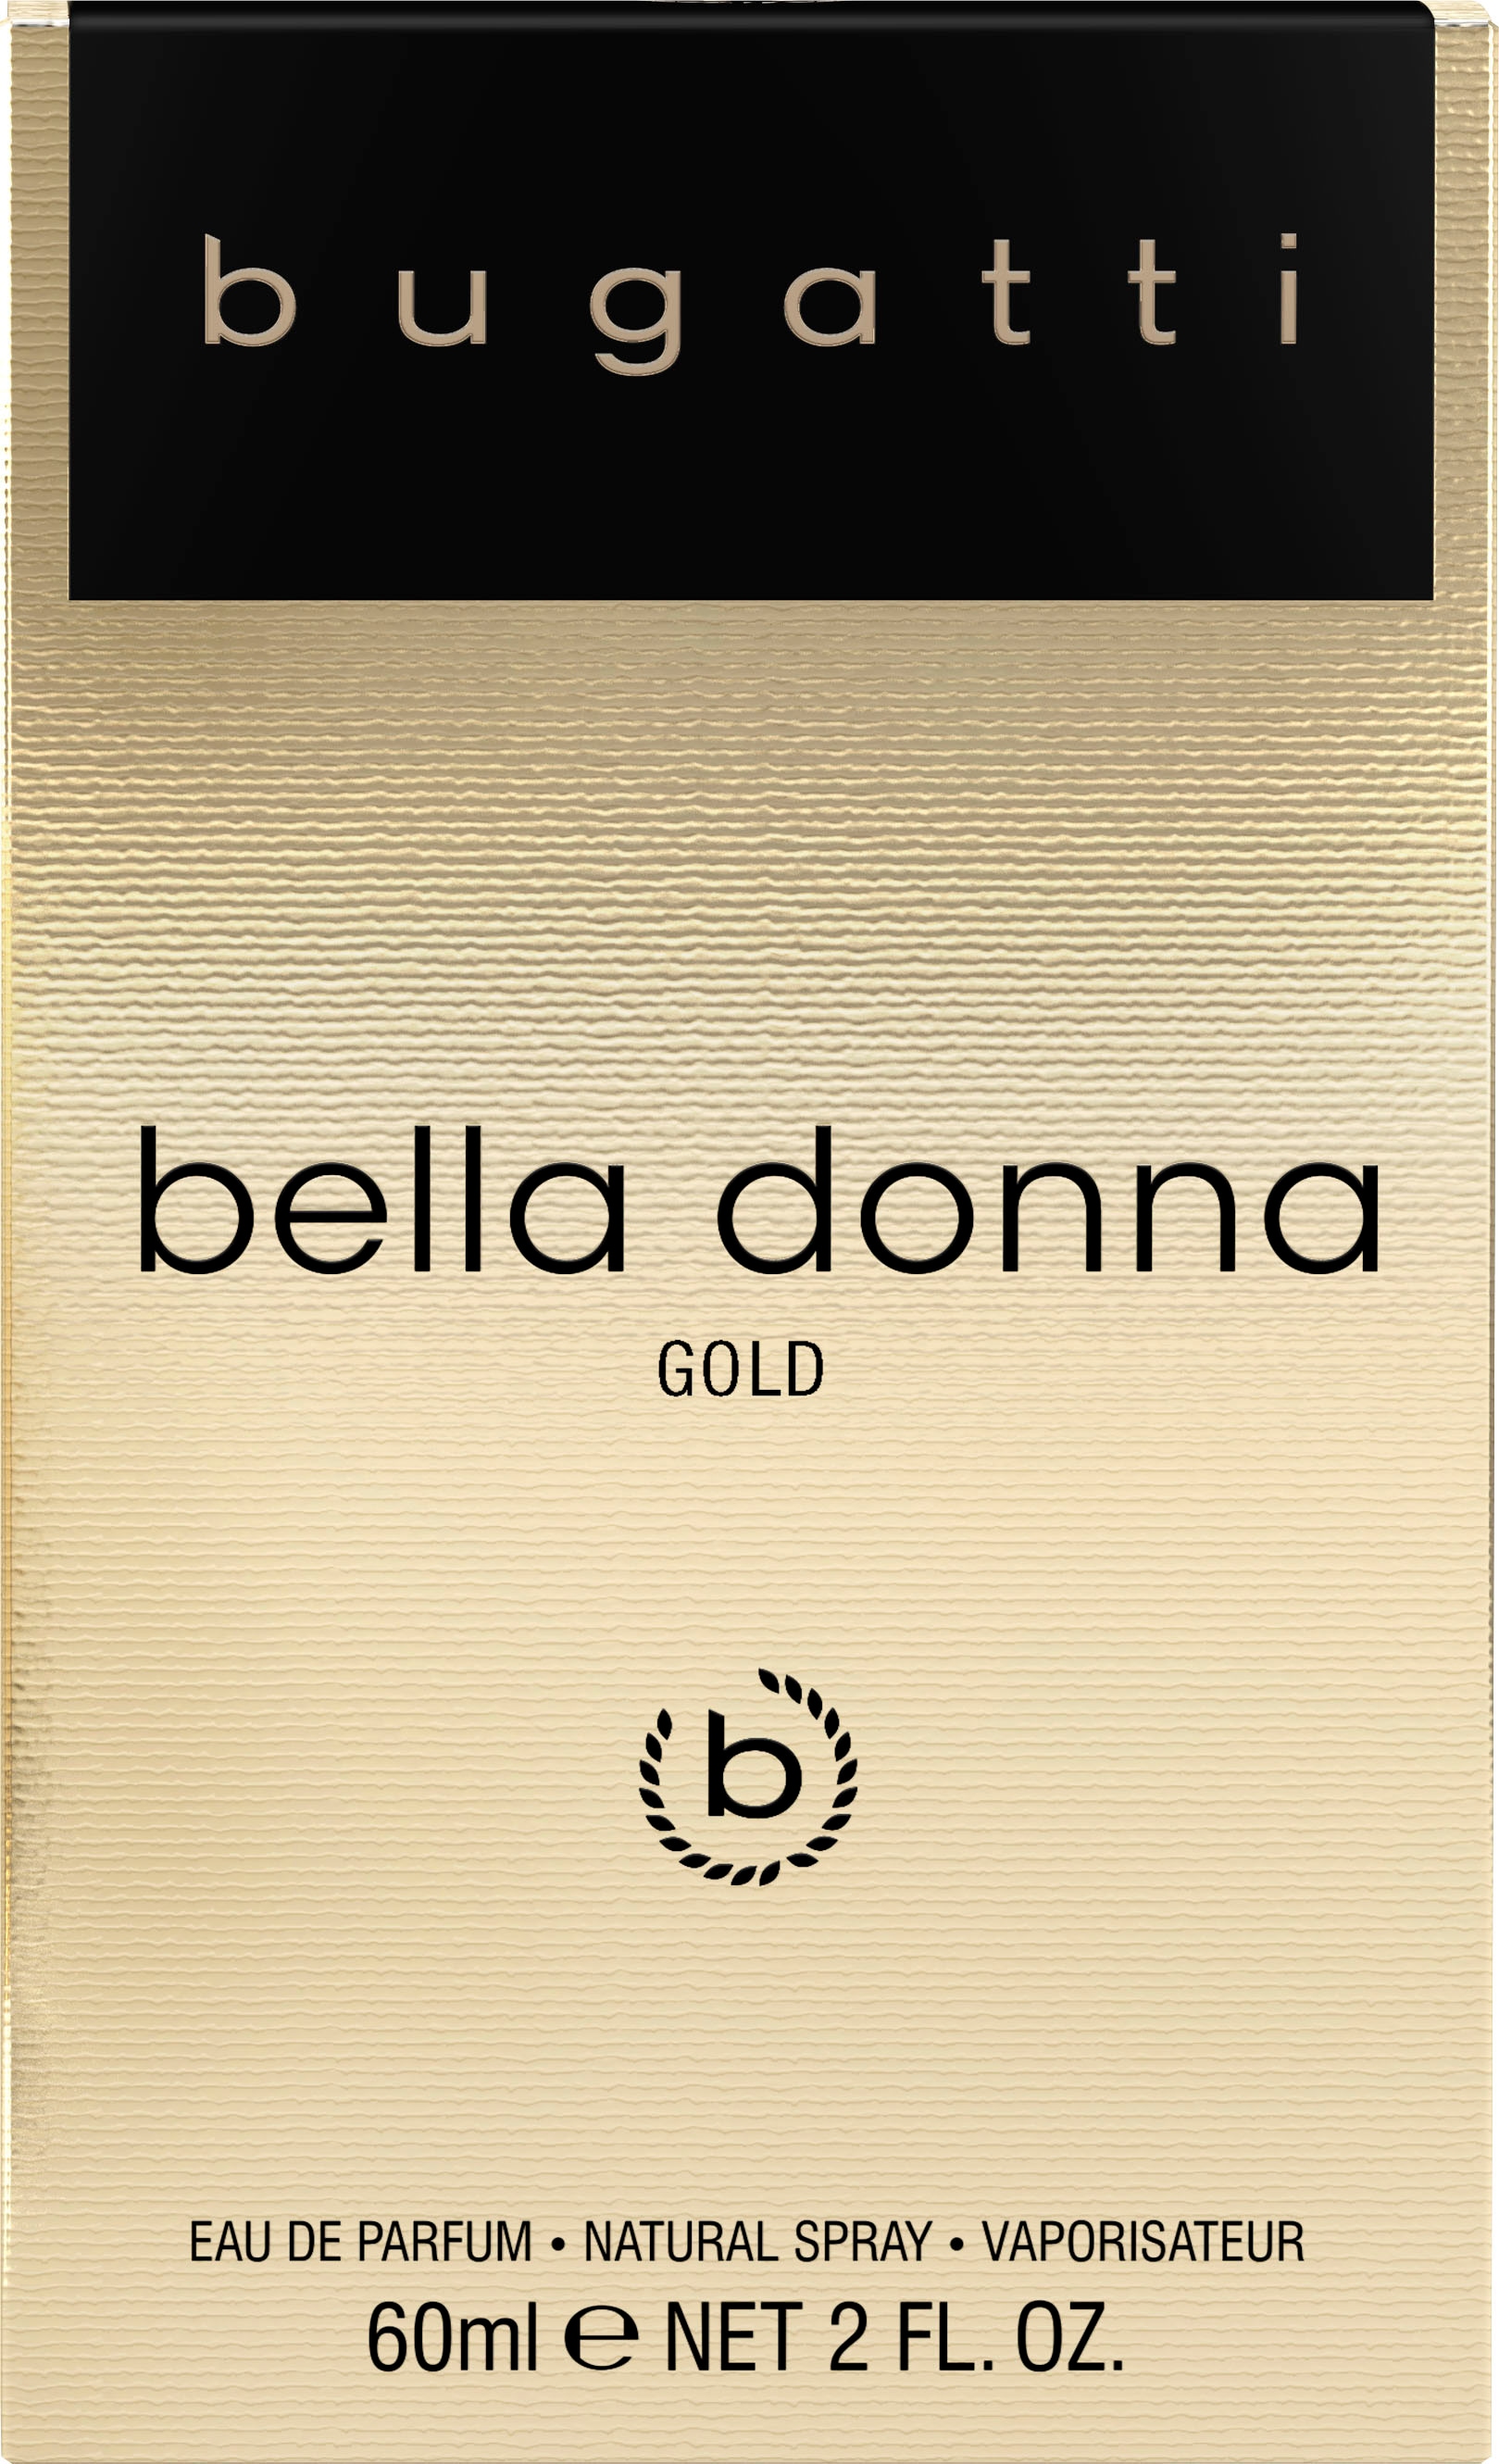 bugatti Eau de | Gold EdP »BUGATTI 60 BAUR ml« Parfum Donna Bella